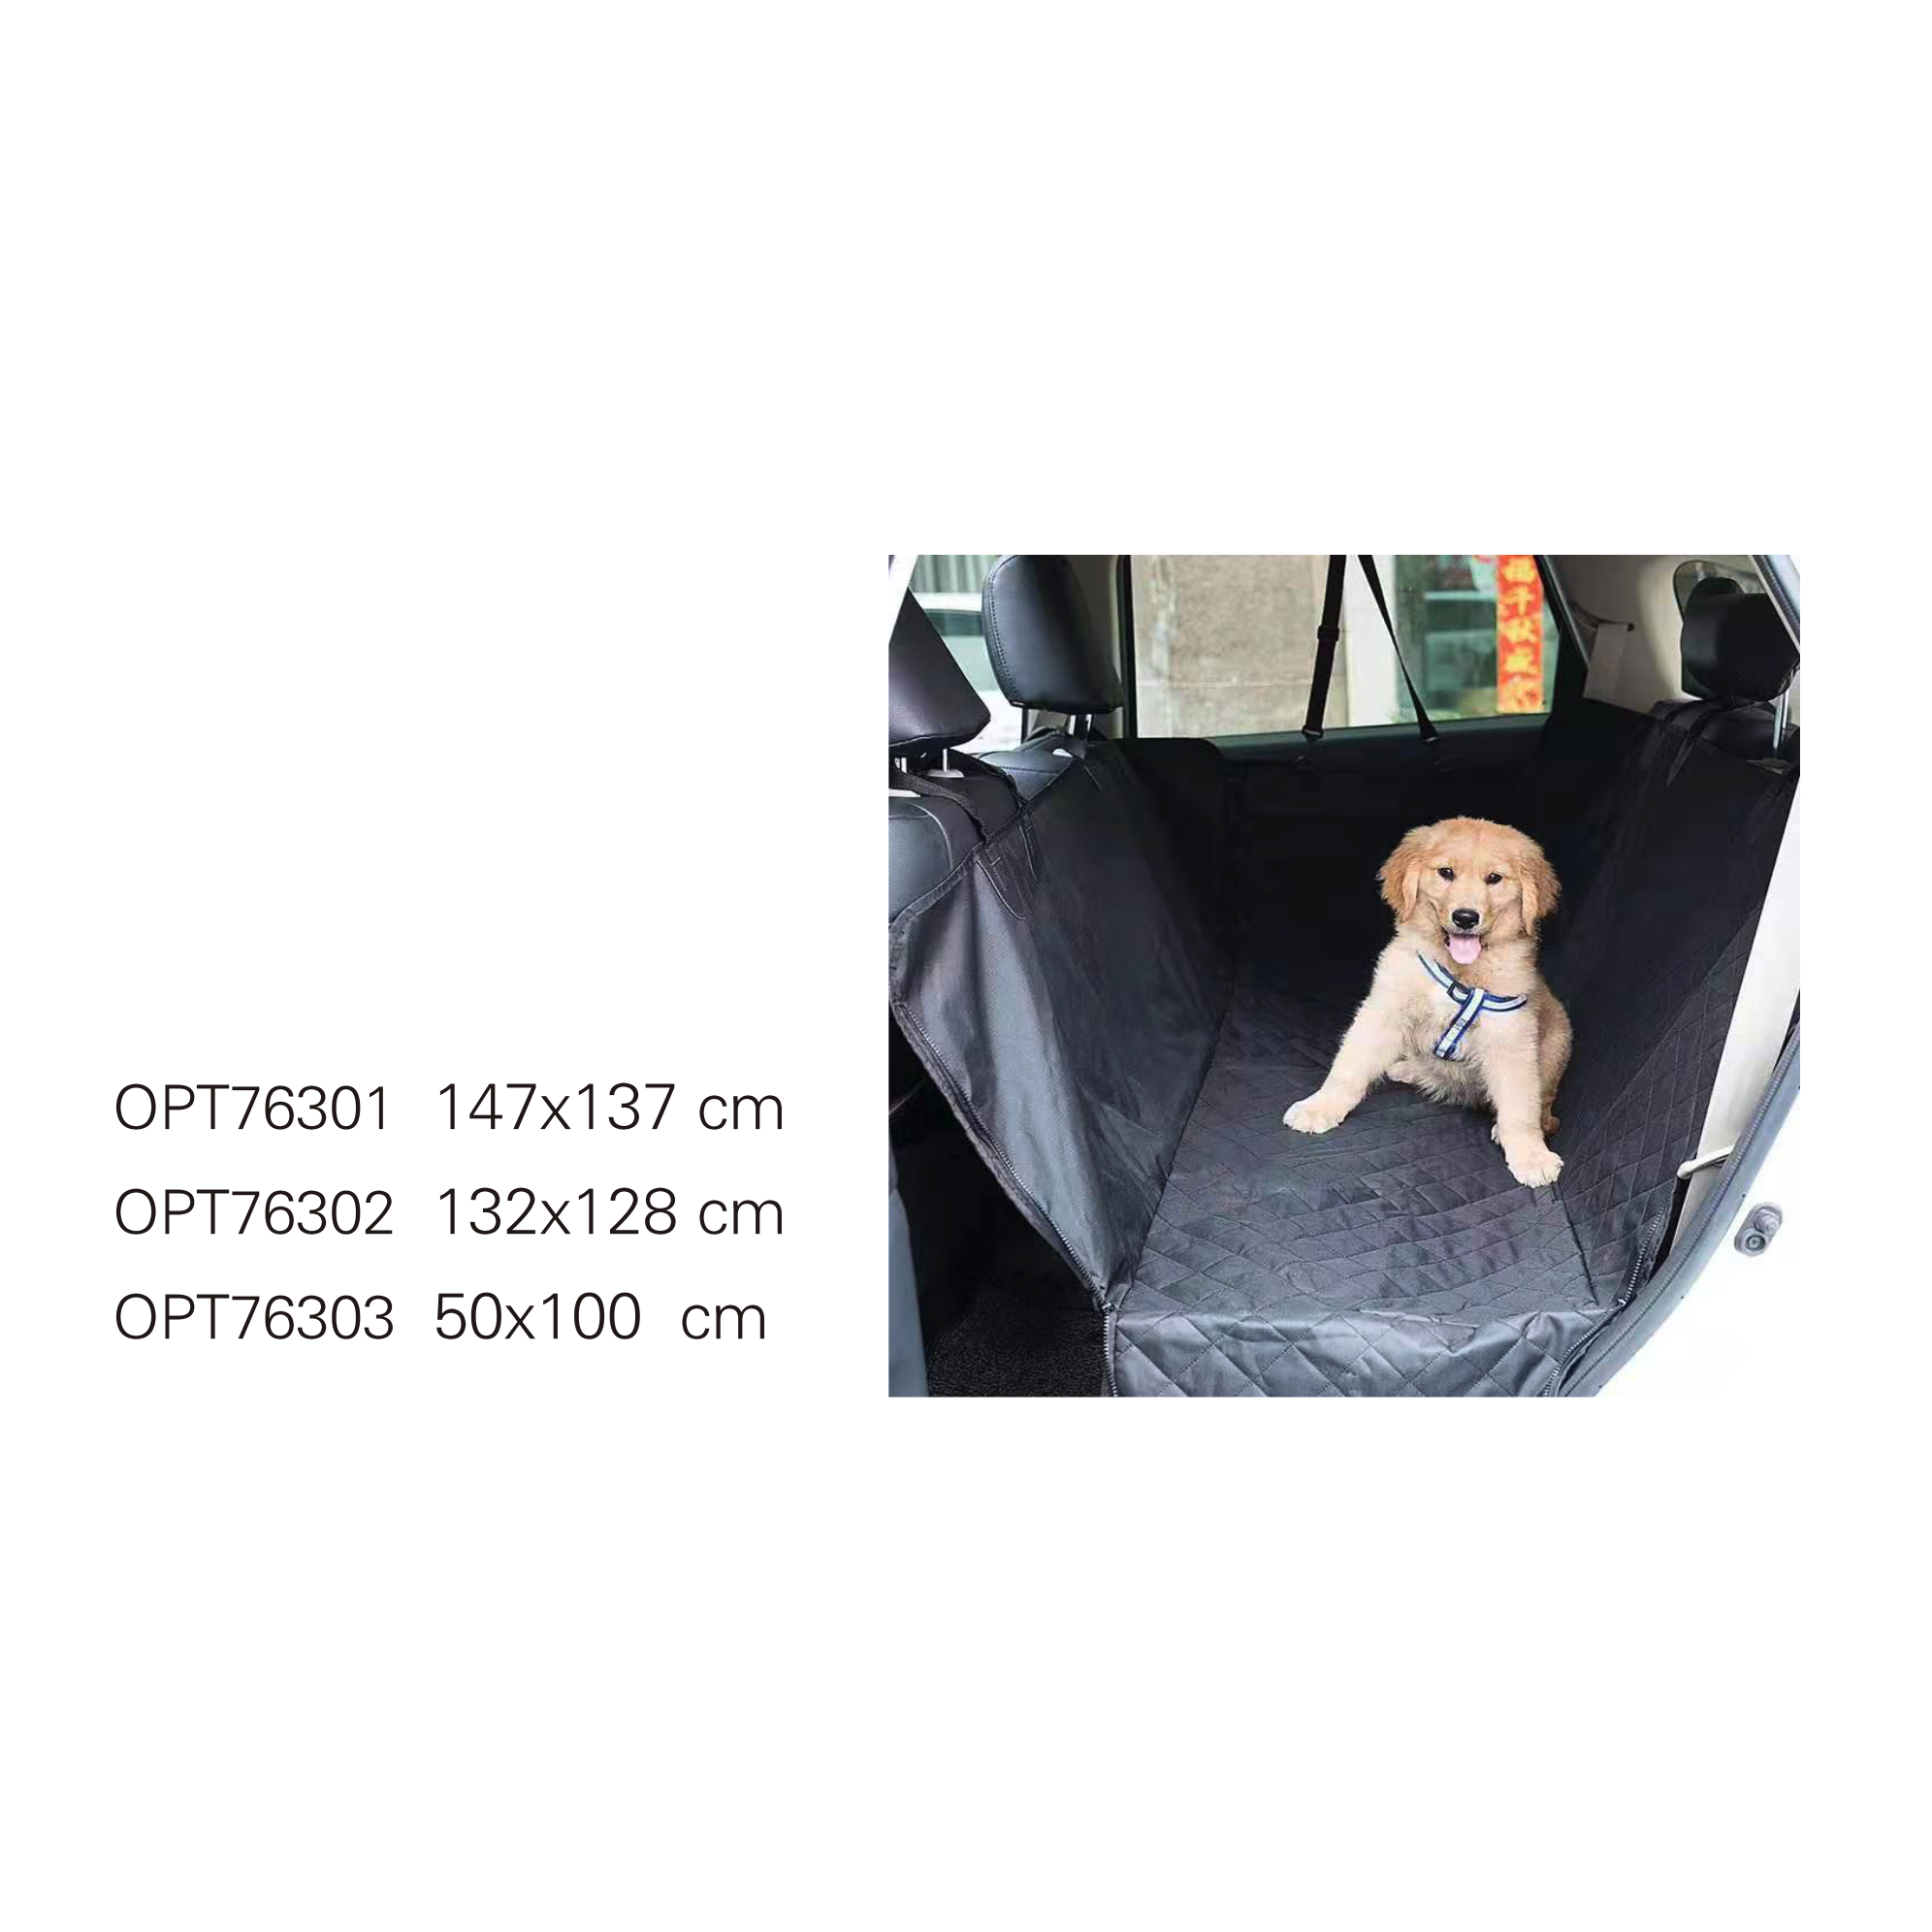 OPT76301-OPT76303 Pet car seat covers